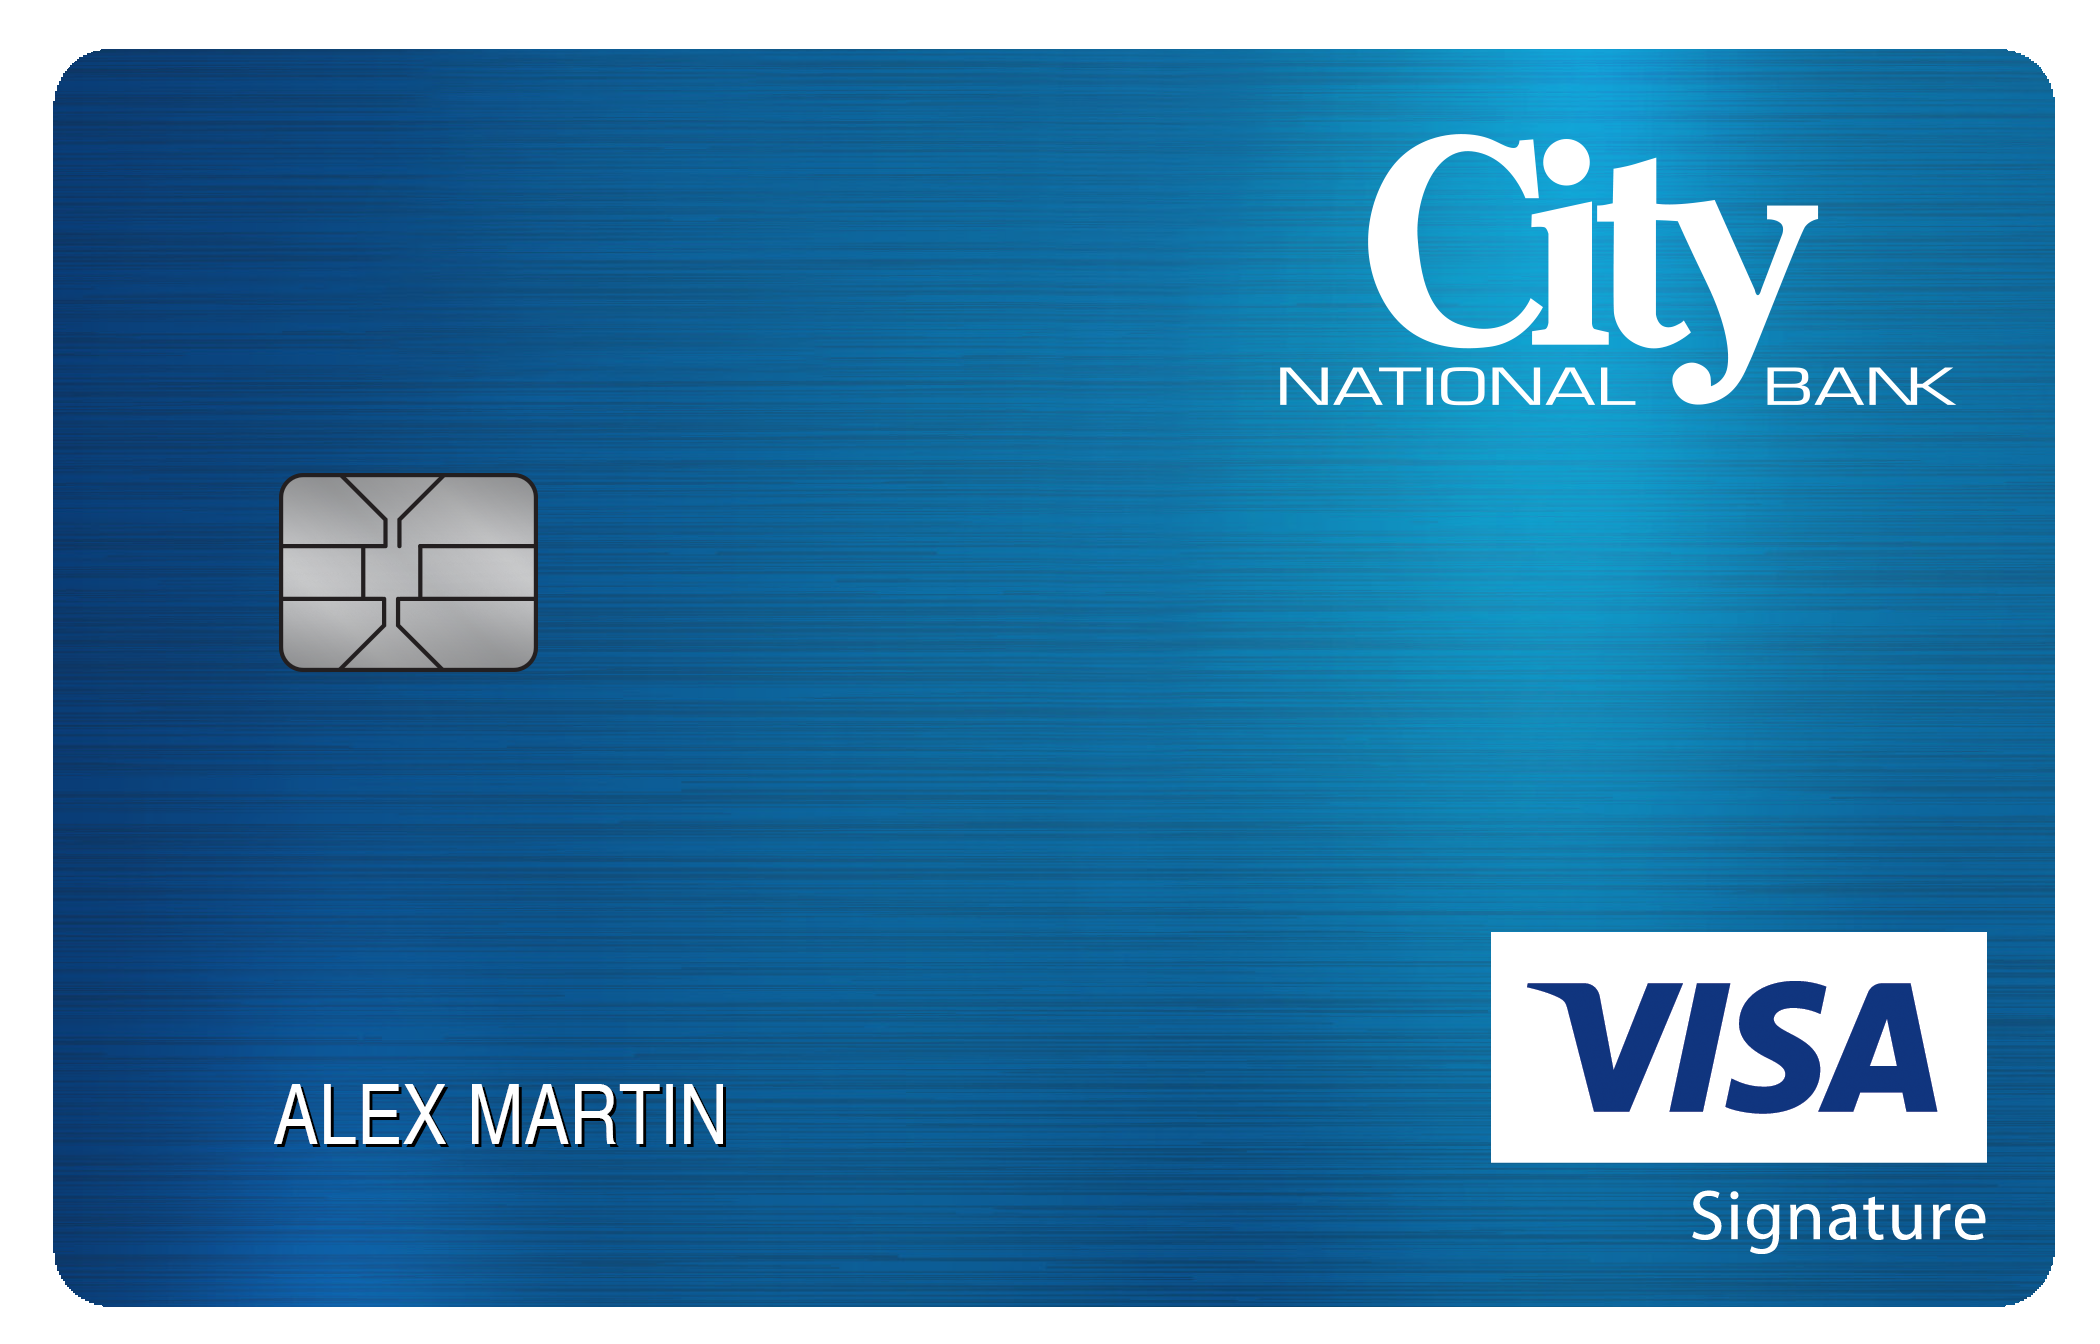 City National Bank Travel Rewards+ Card